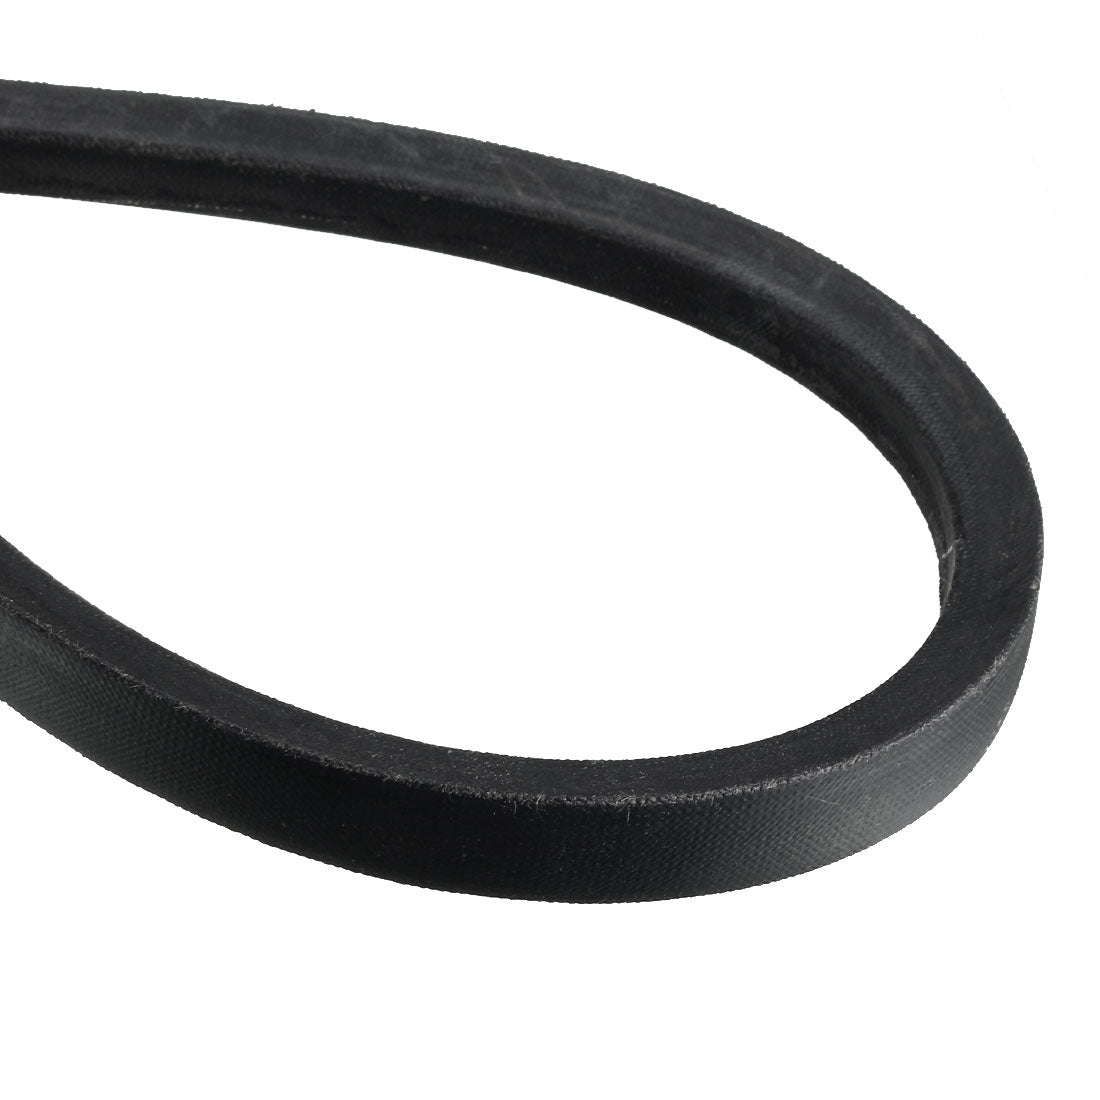 uxcell Uxcell B34 V-Belts 34" Pitch Length, B-Section Rubber Drive Belt 2pcs